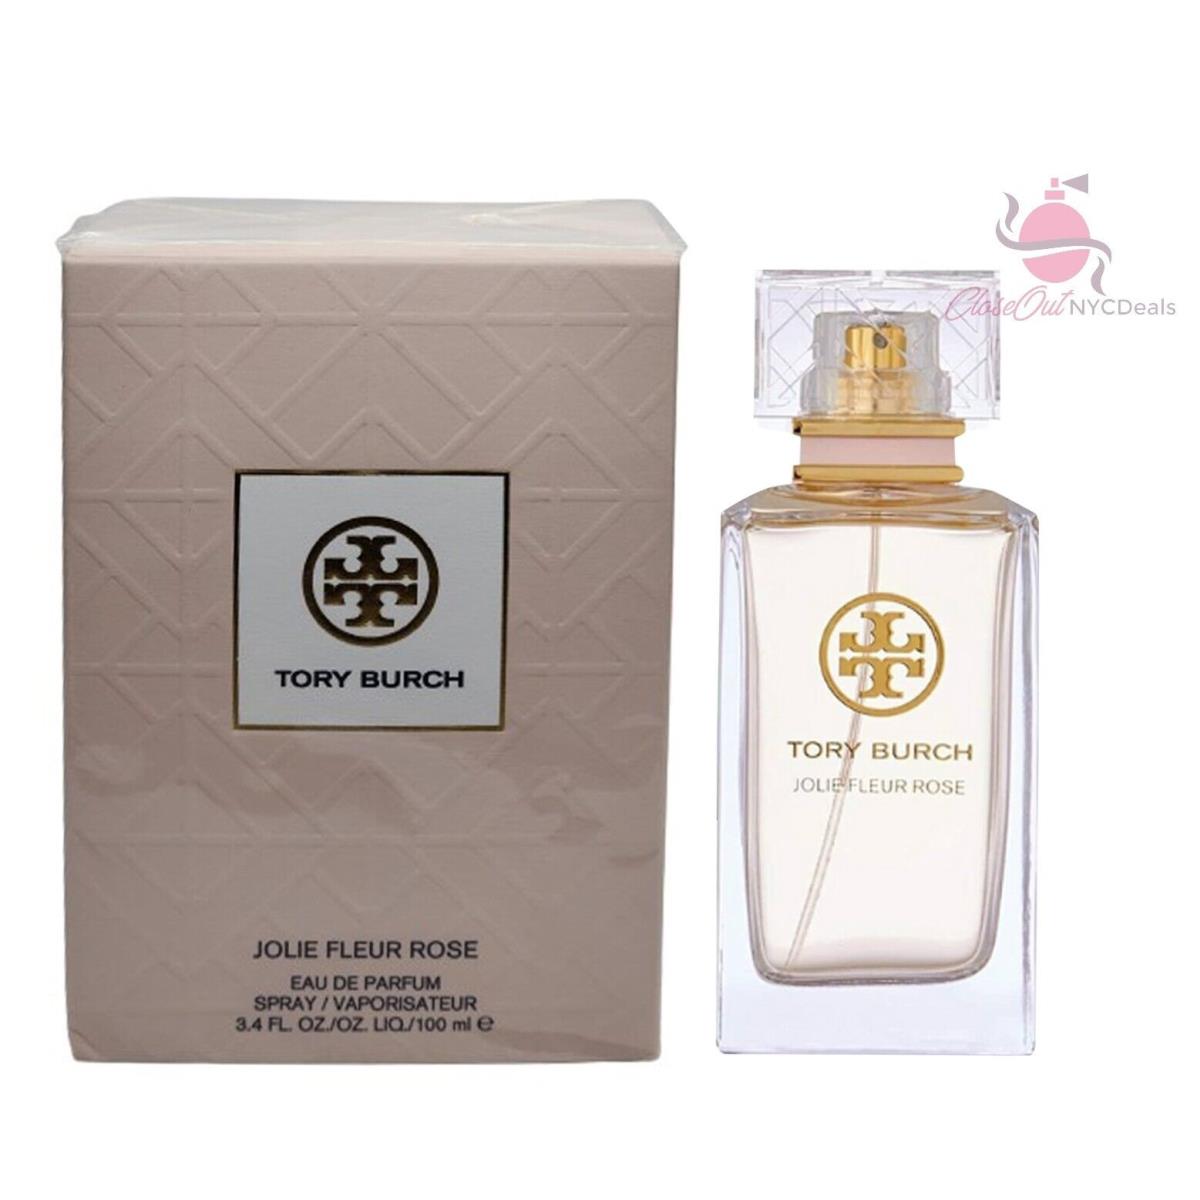 Tory Burch Jolie Fleur Rose 3.4 oz / 100 ml Eau De Parfum Spray For Women